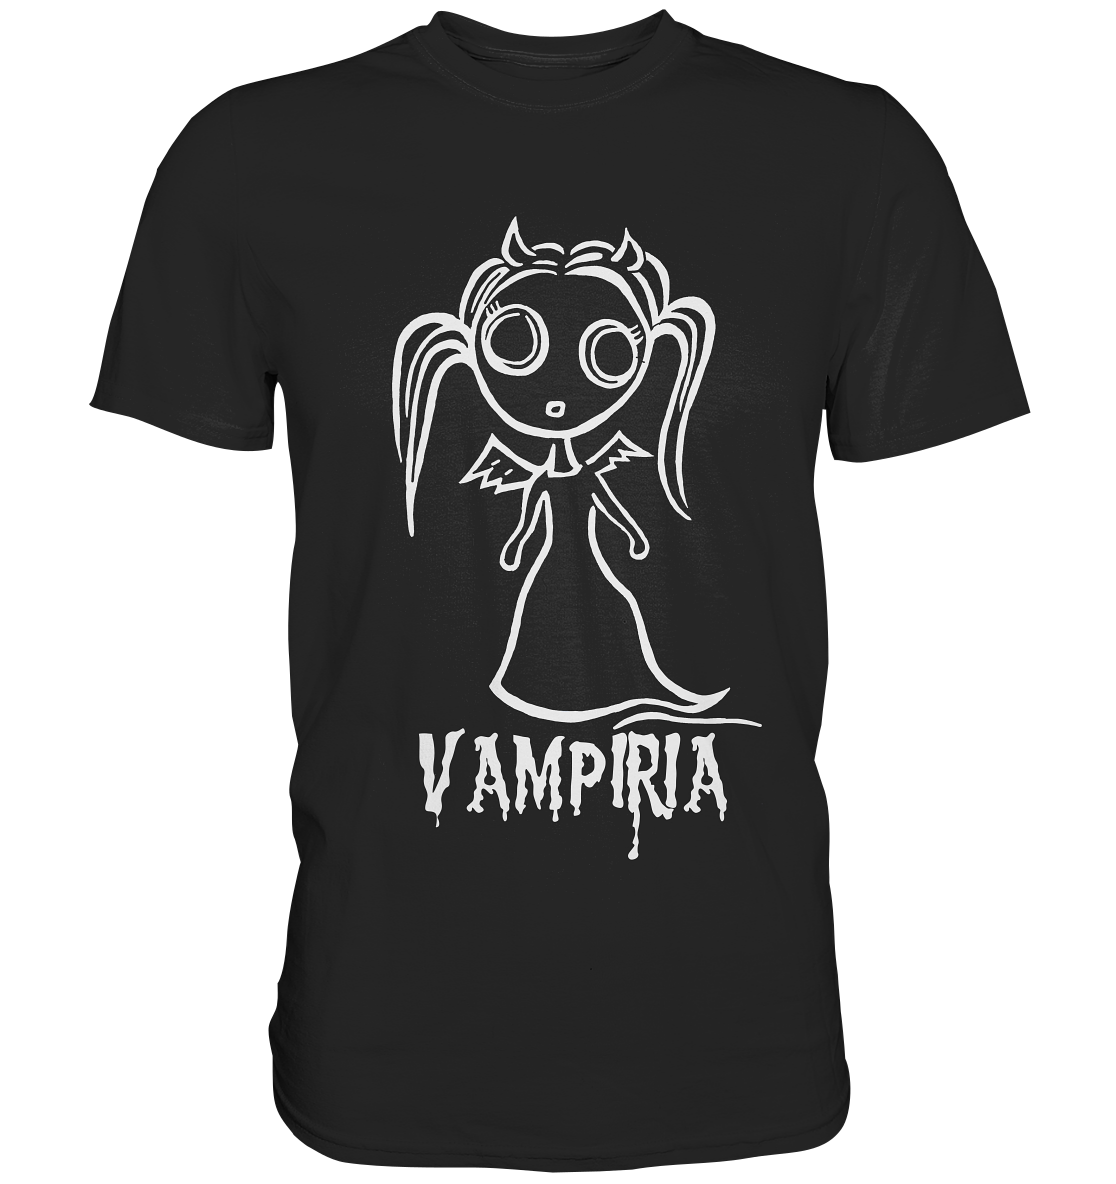 Vampiria - Premium Shirt